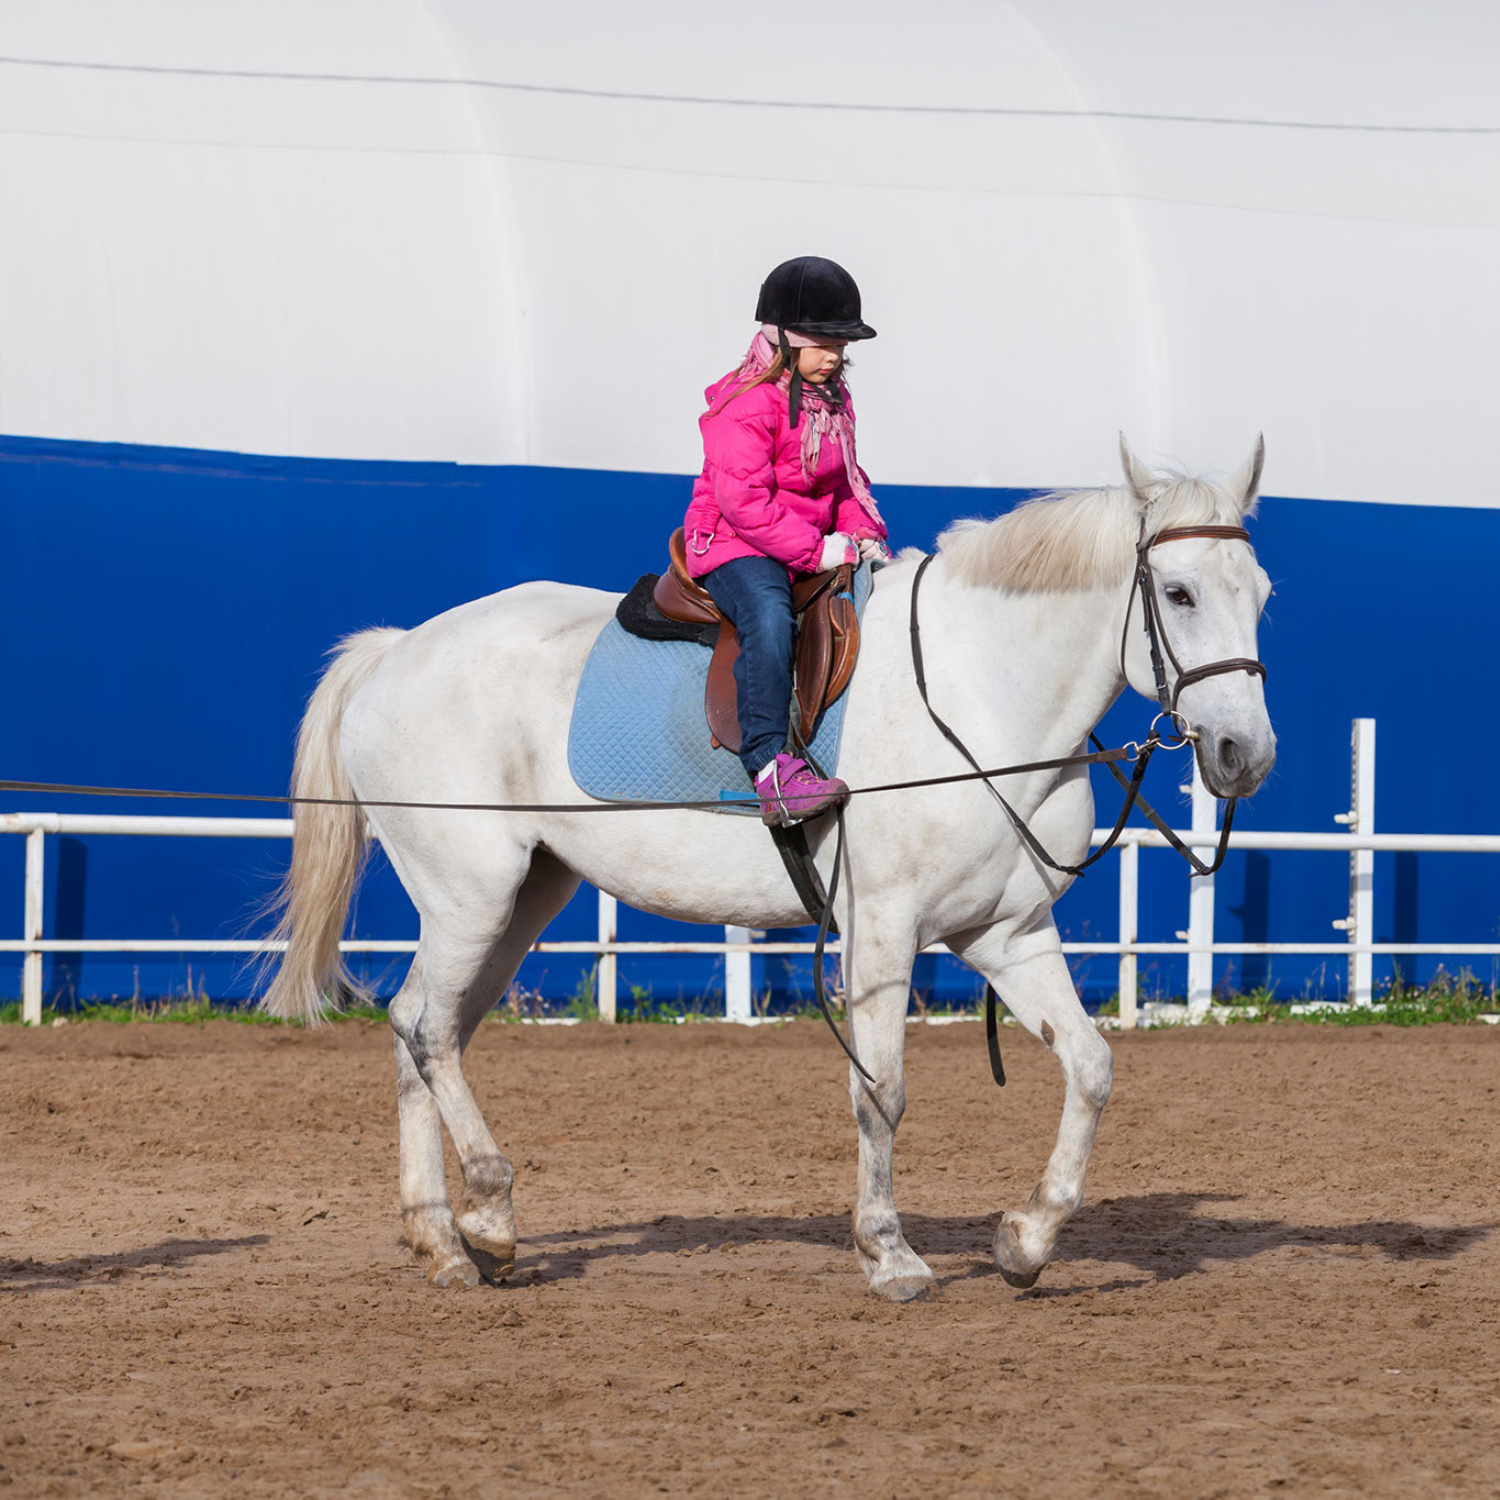 Girl riding a white horse in a fun riding lesson.